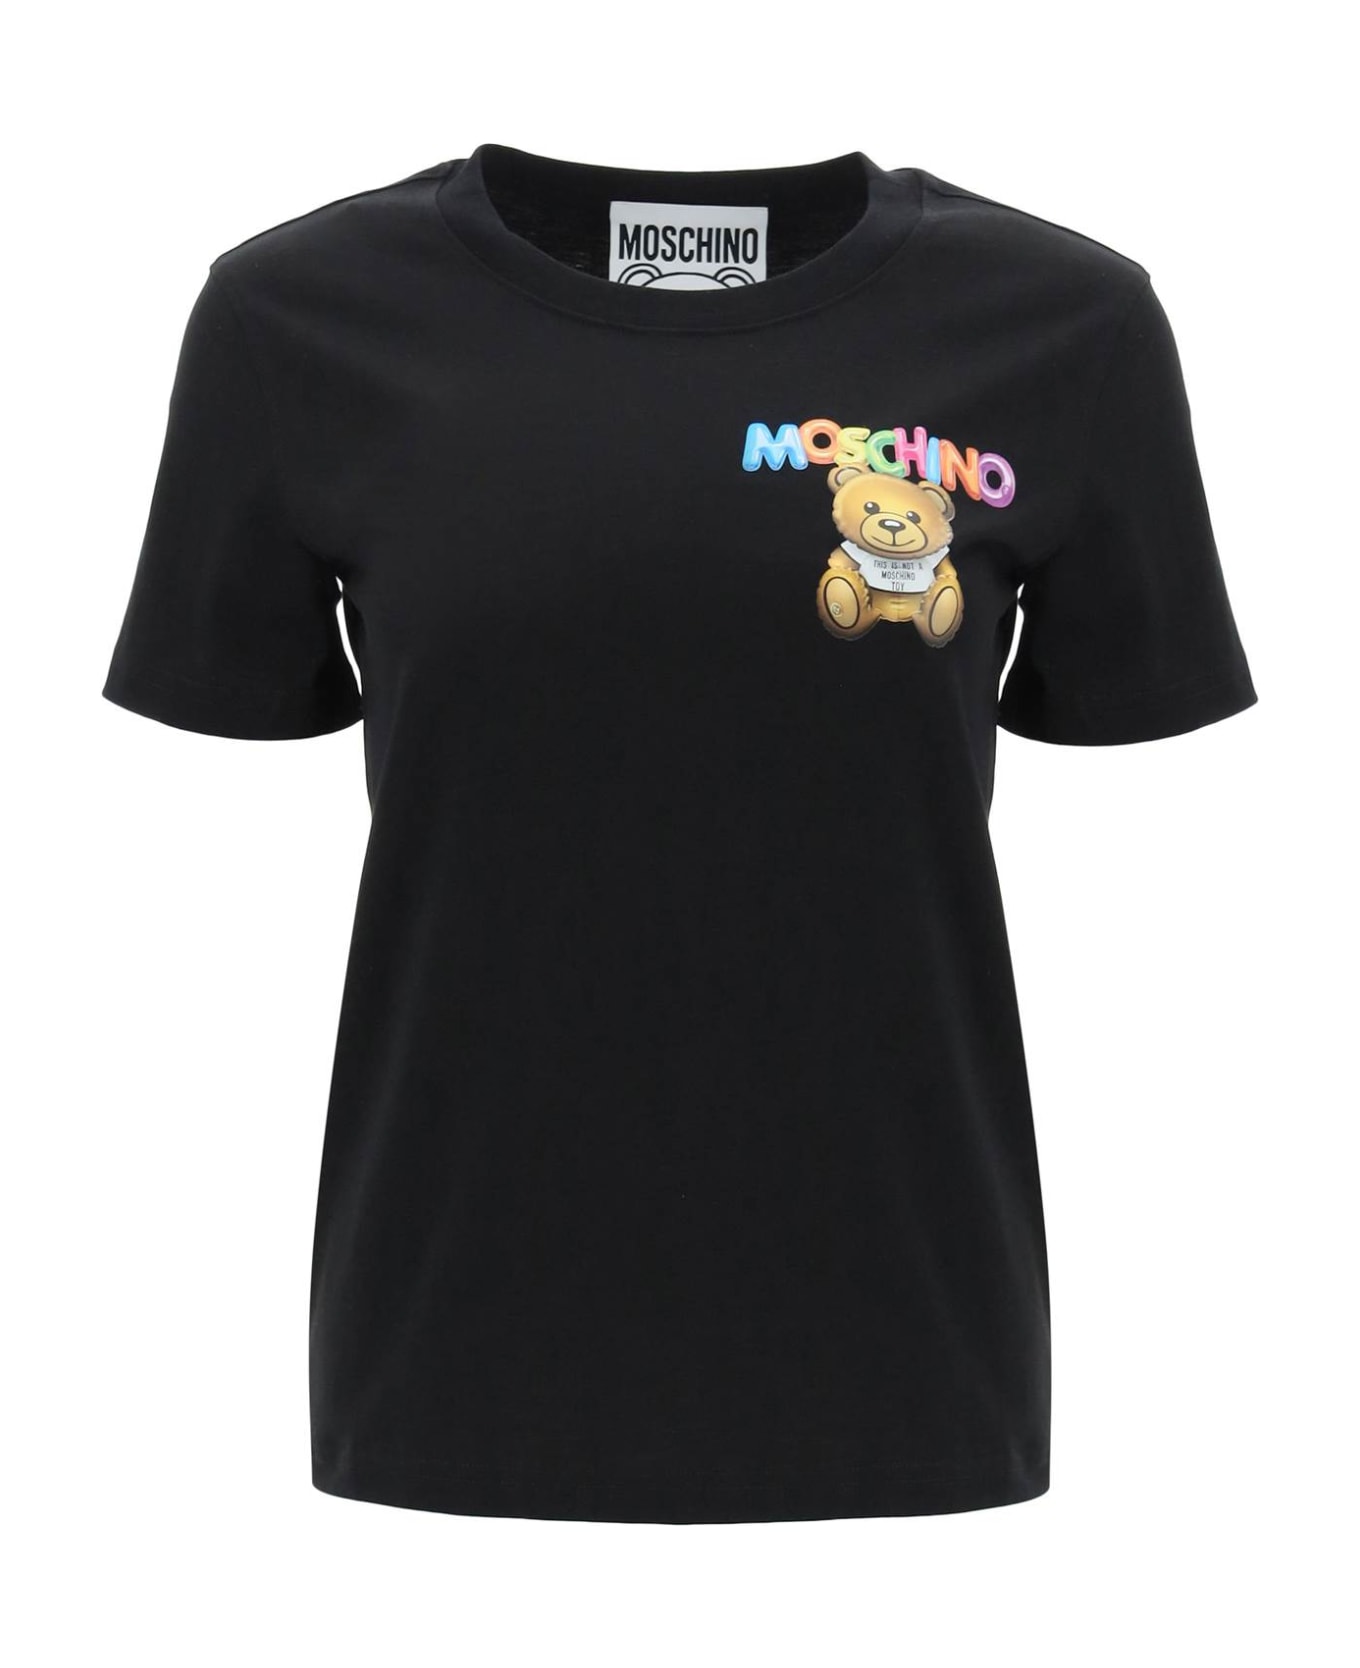 Moschino Teddy Bear Logo T-shirt - FANTASIA NERO (Black)